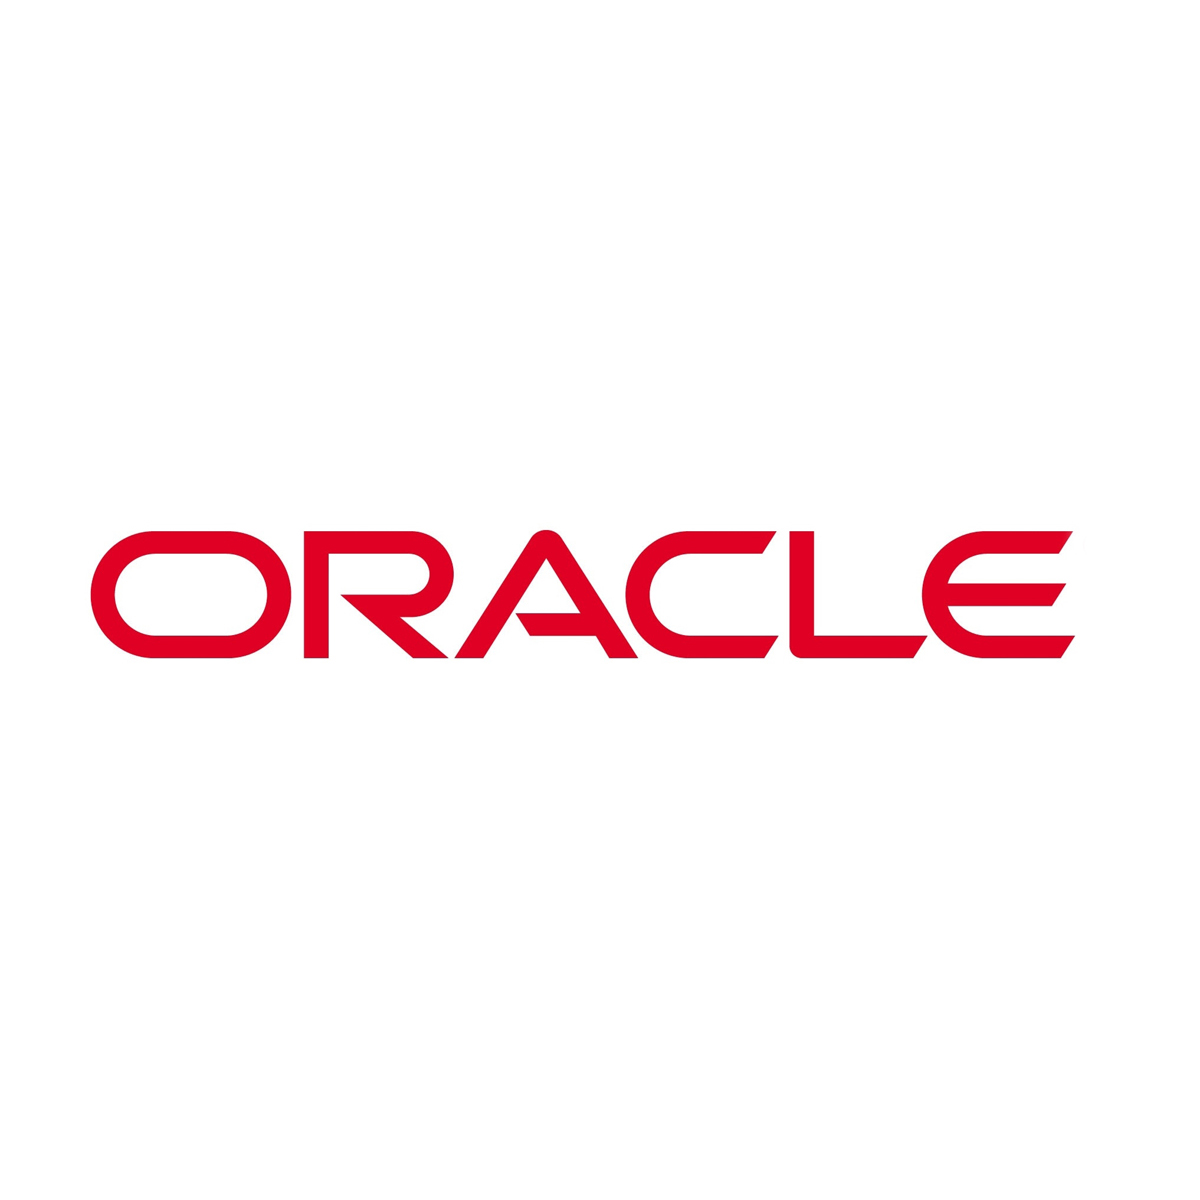  Top Cloud CRM Application Logo: Oracle